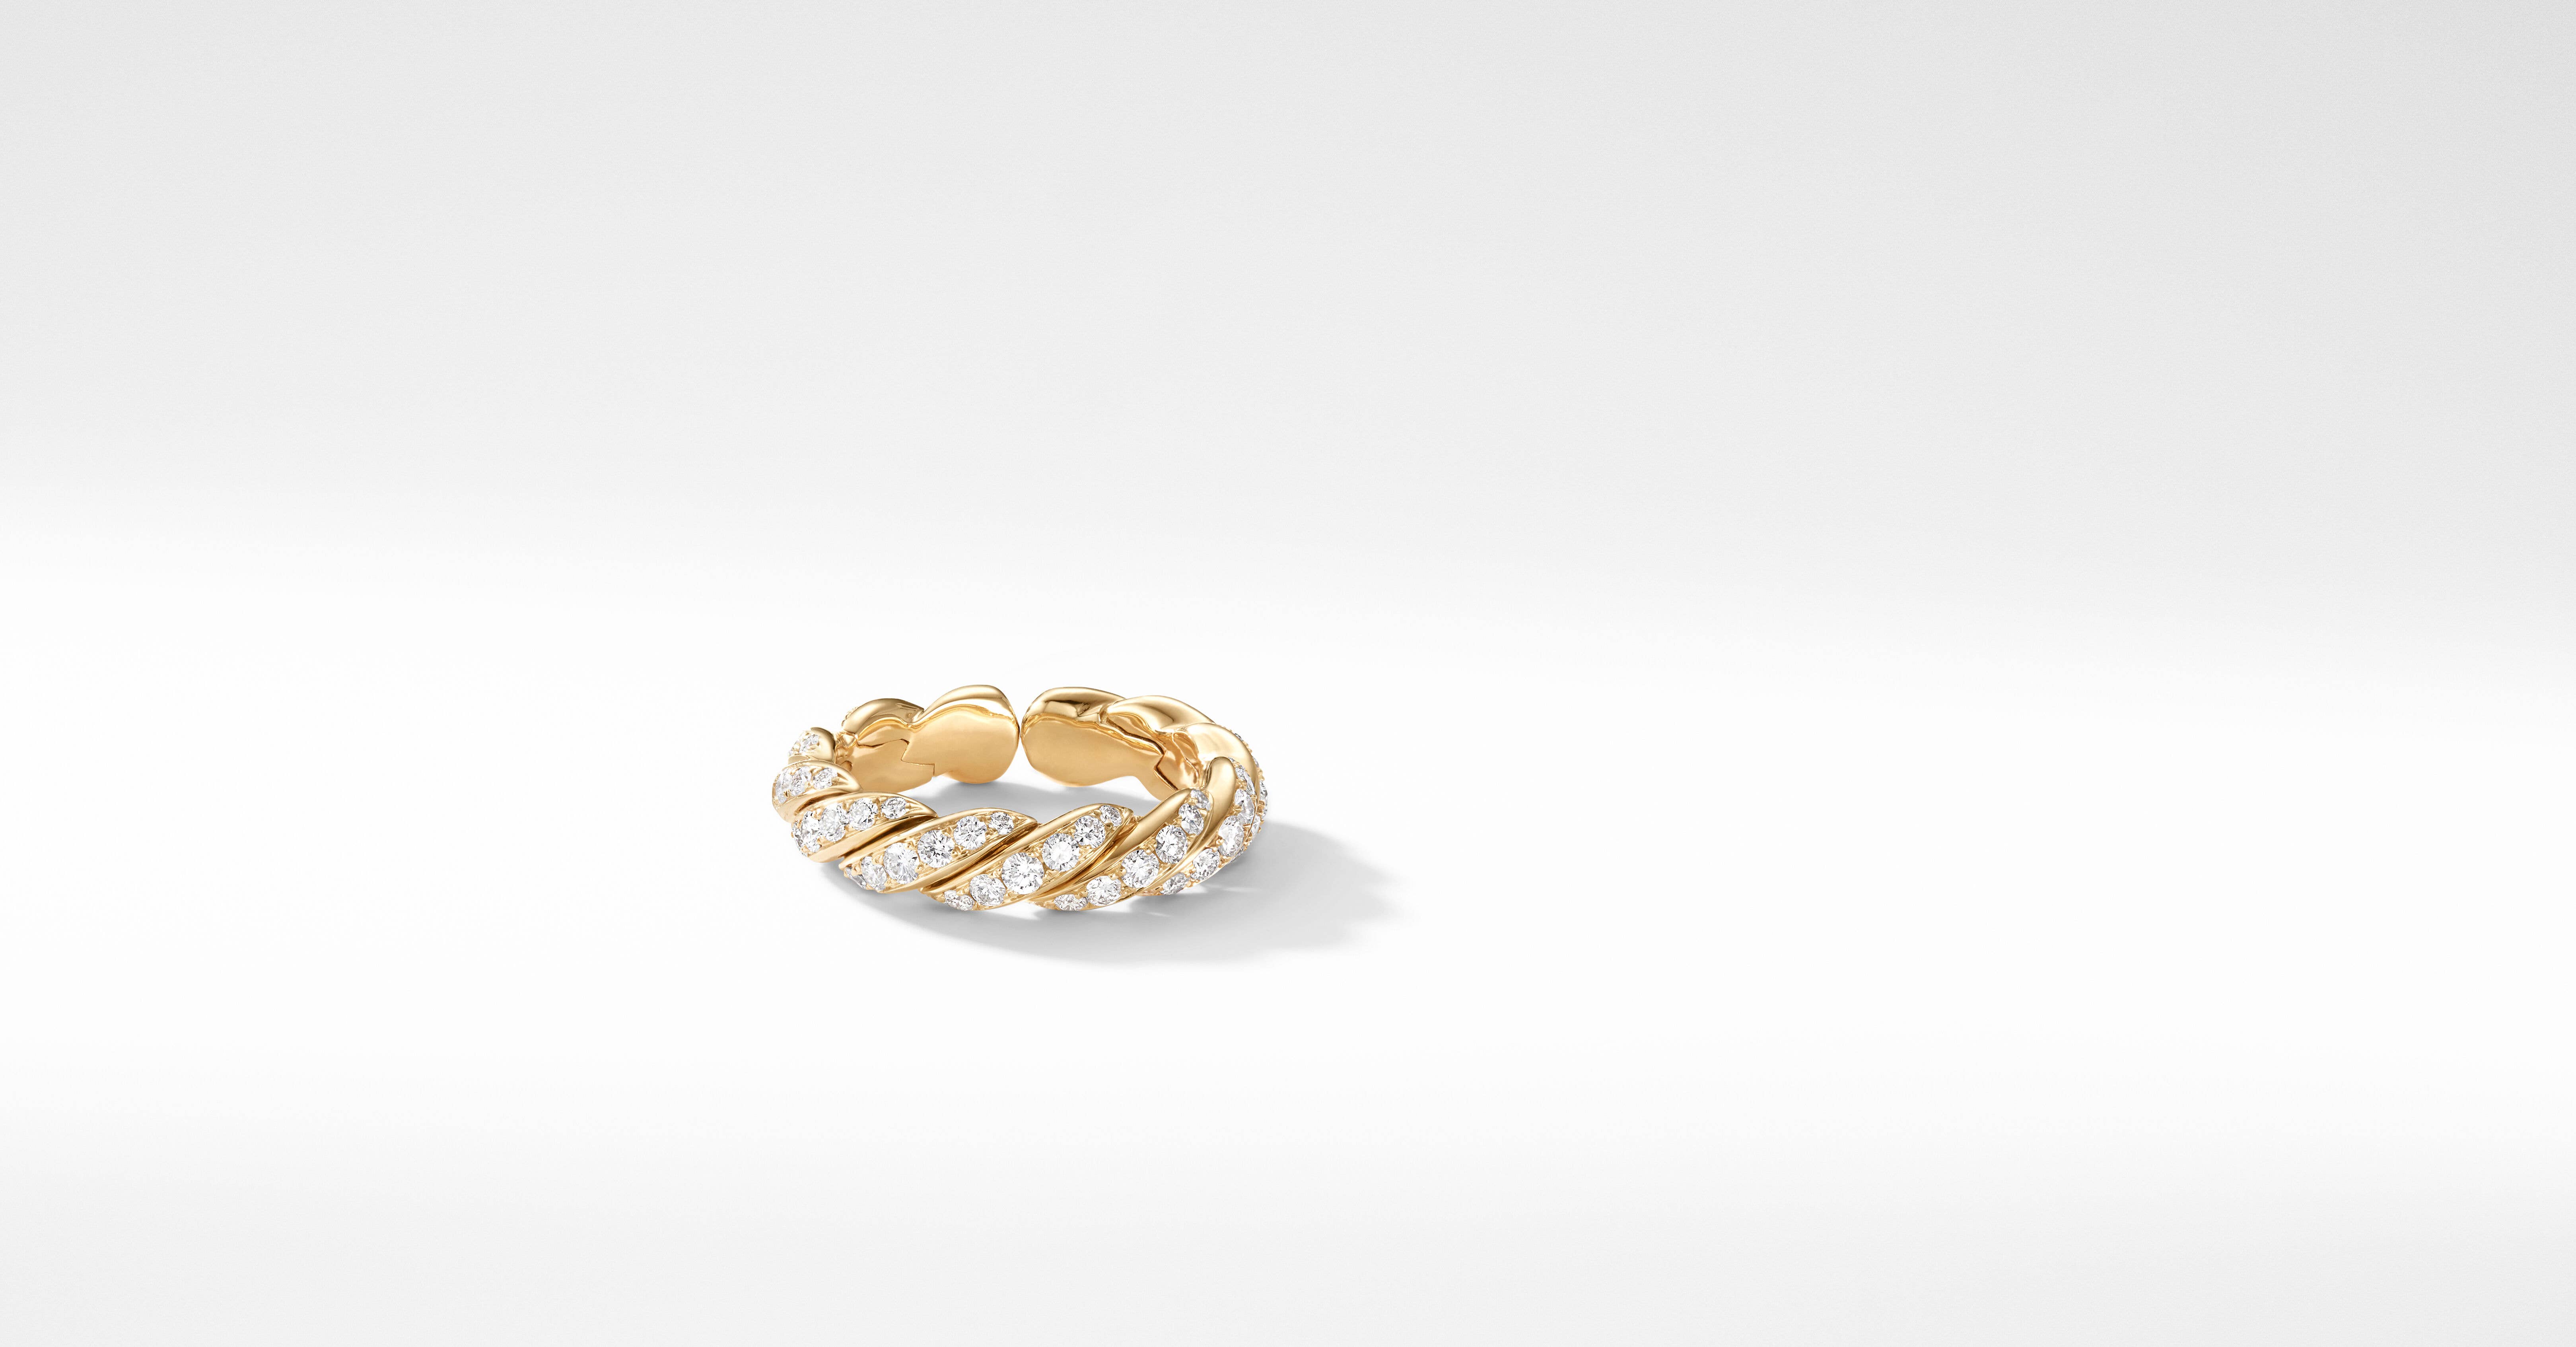 Pavéflex Band Ring in 18K White Gold with Diamonds | David Yurman